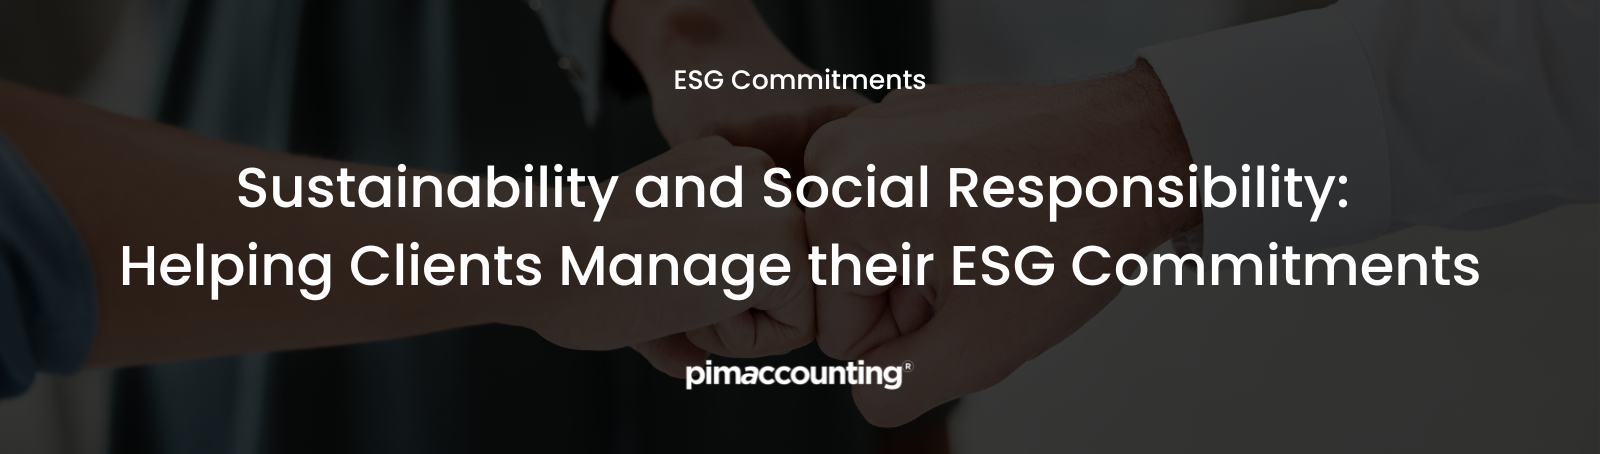 Sustainability & Social Responsibility: Managing ESG Commitments